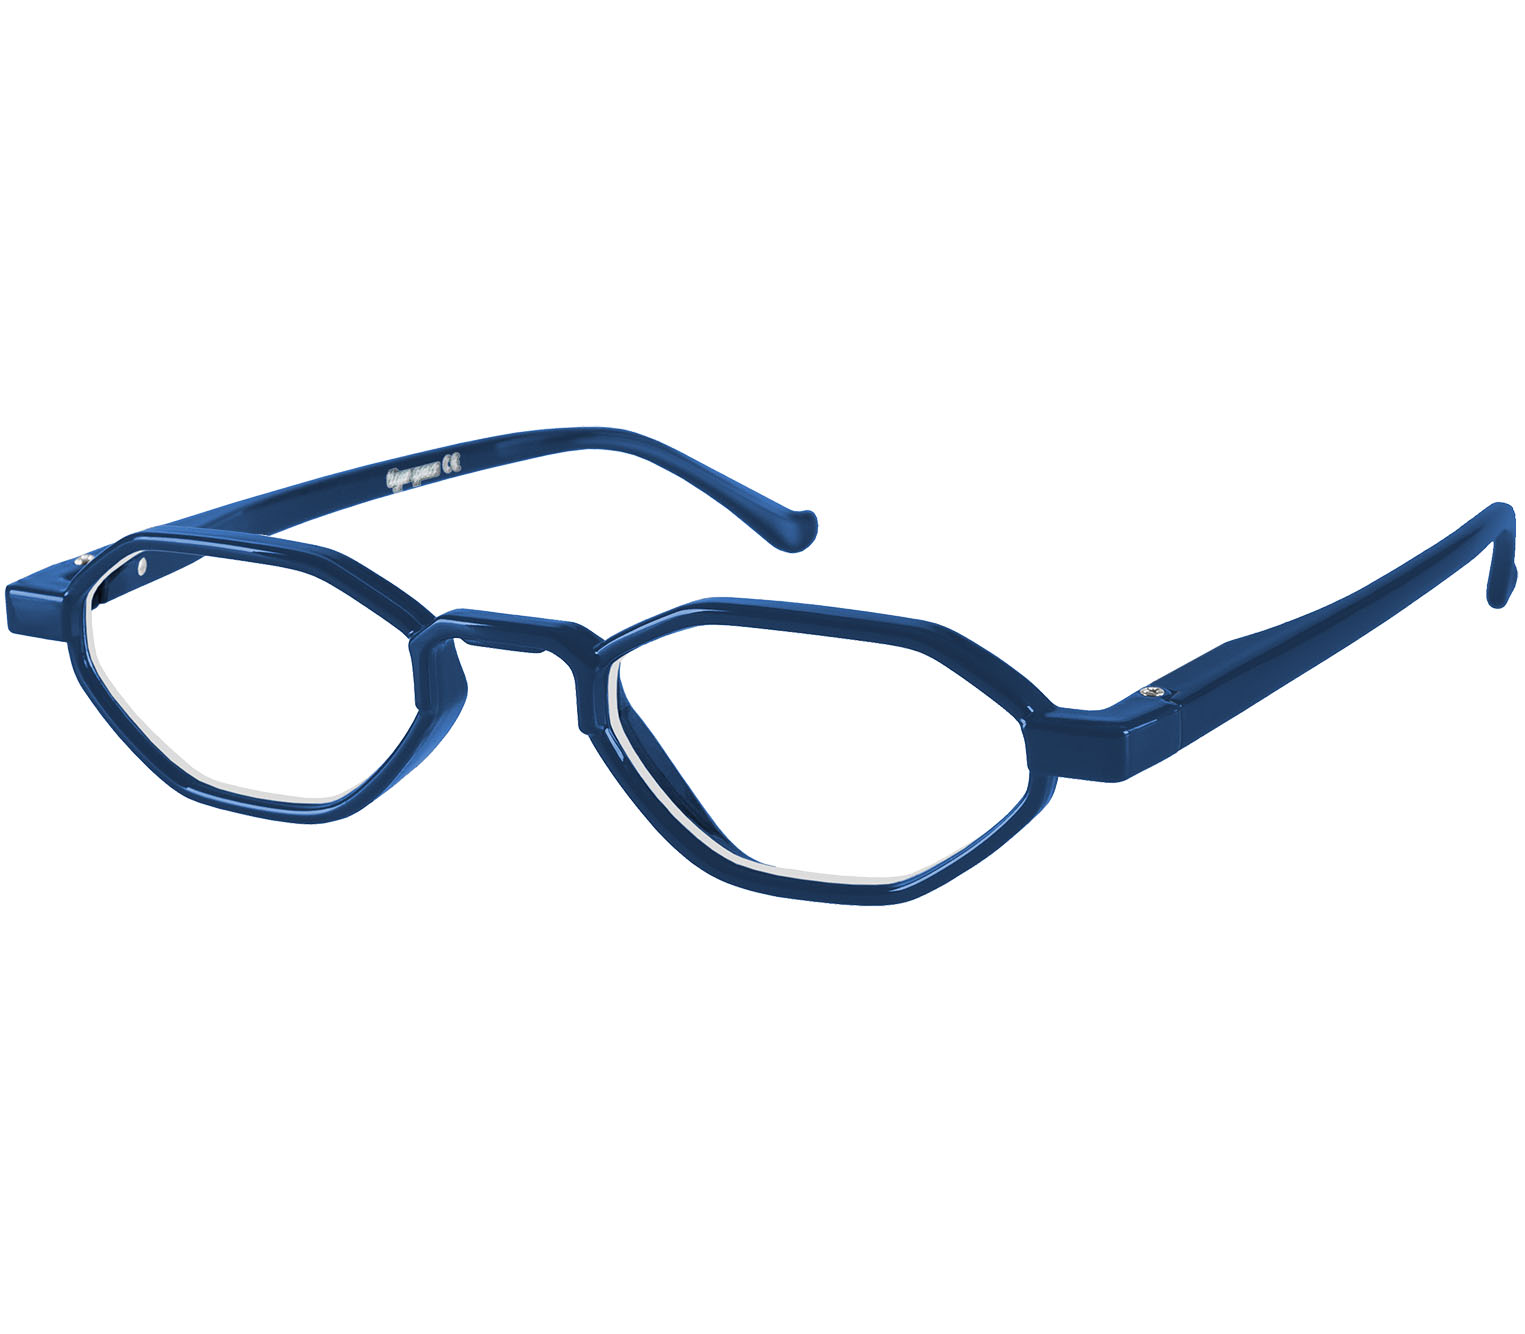 Main Image (Angle) - Quincy (Blue) Retro Reading Glasses